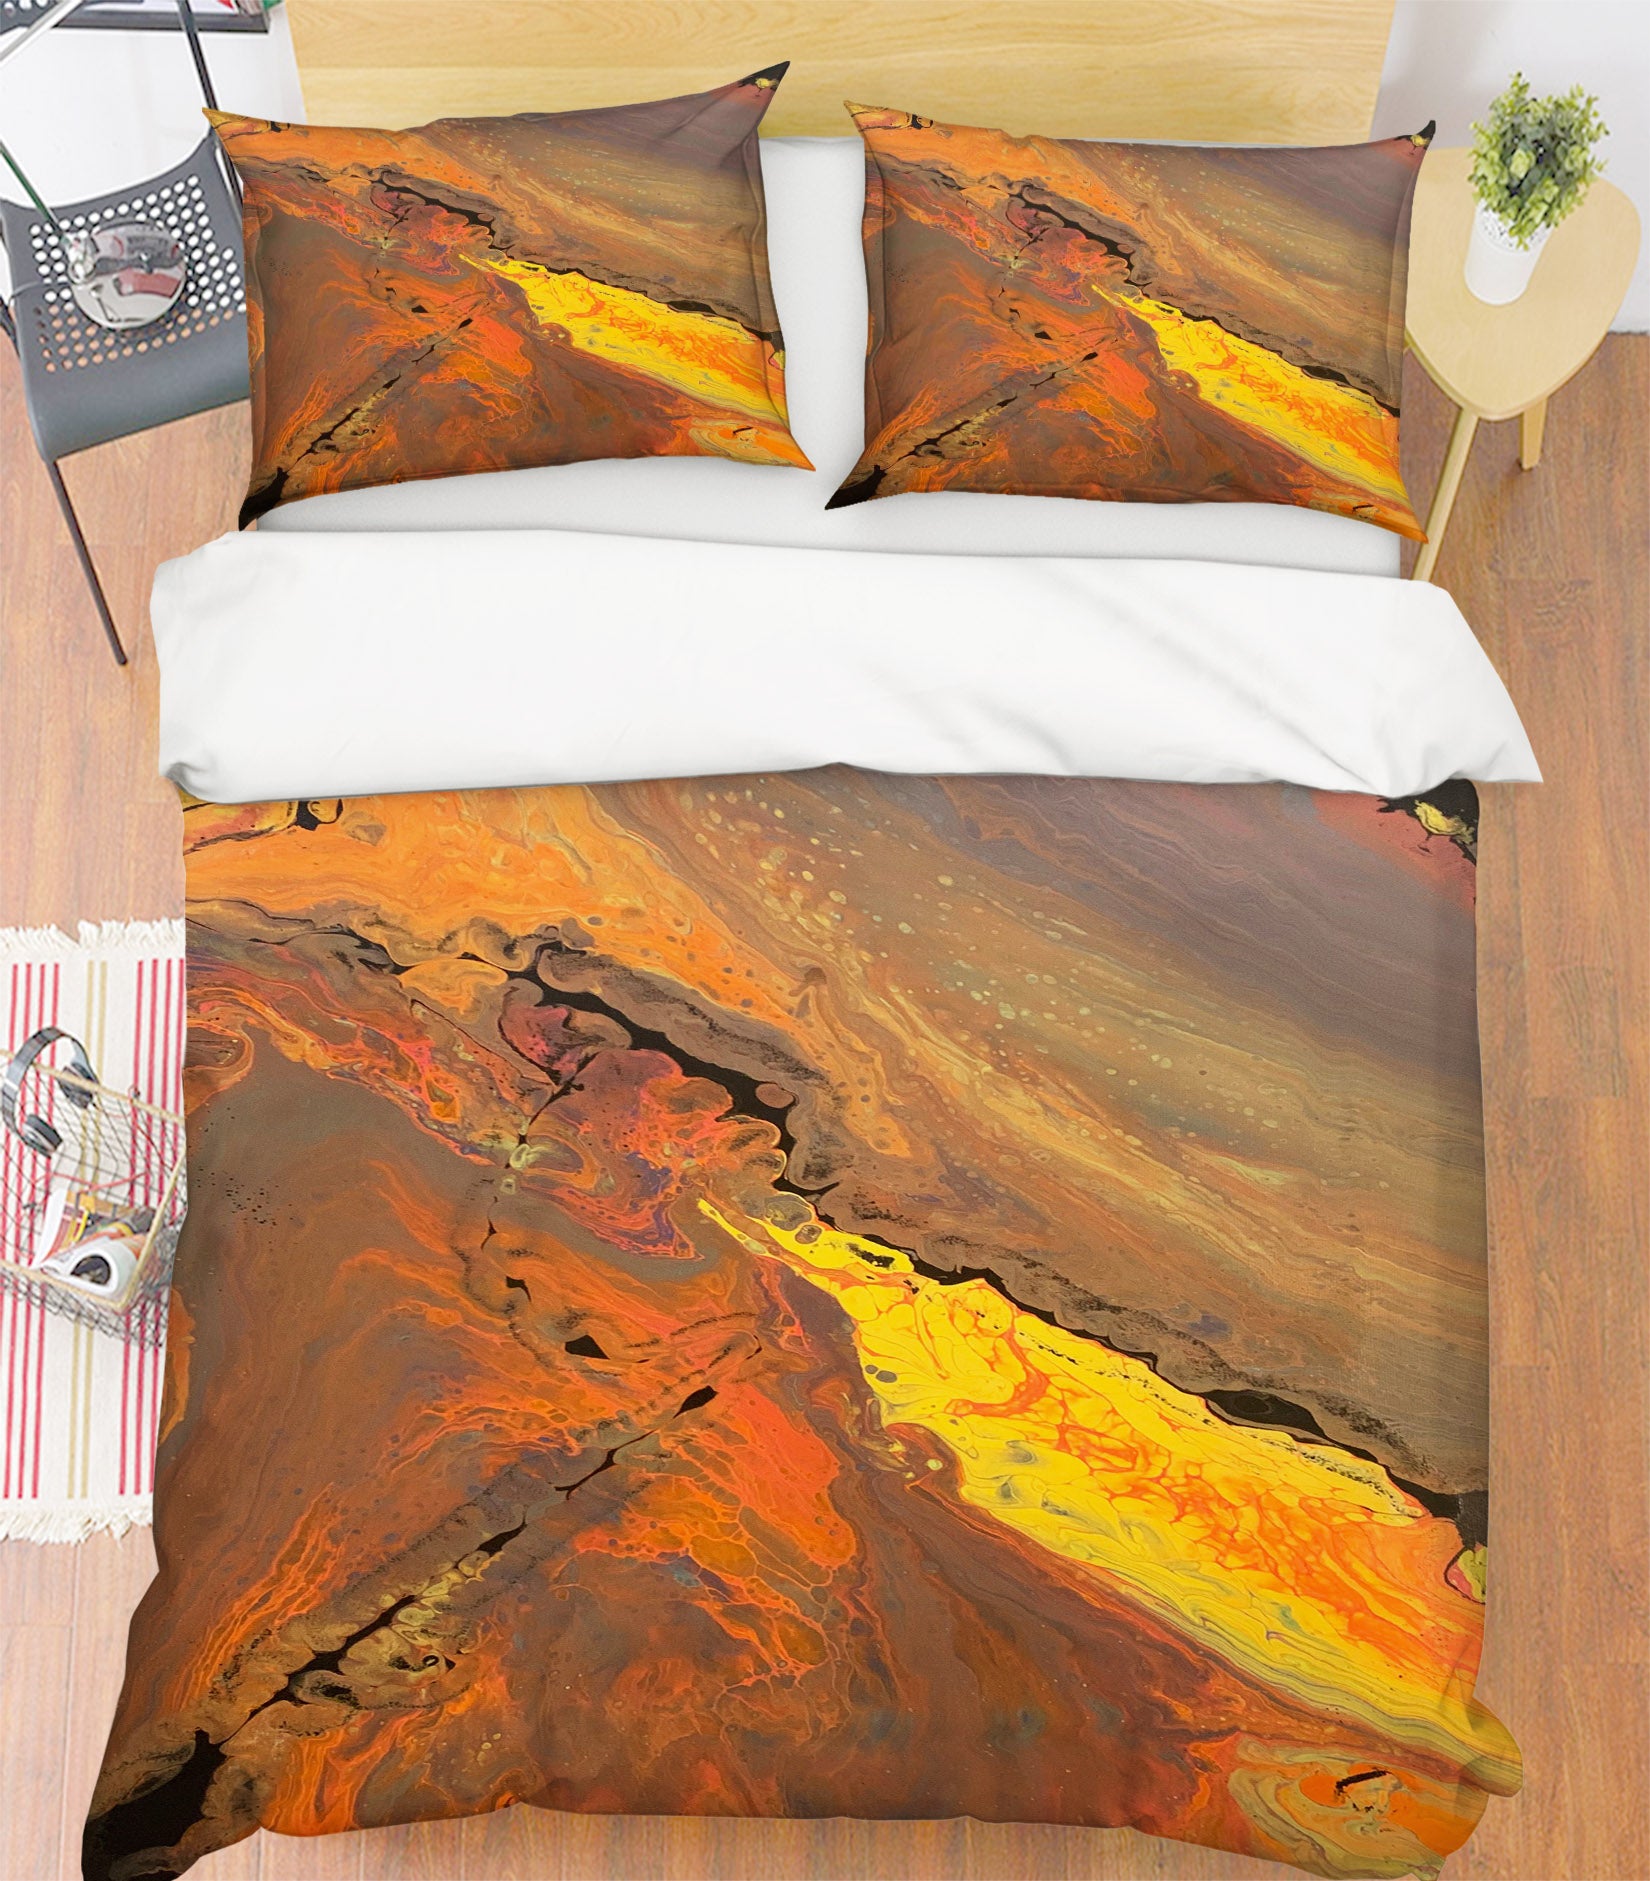 3D Golden Brown 40053 Valerie Latrice Bedding Bed Pillowcases Quilt